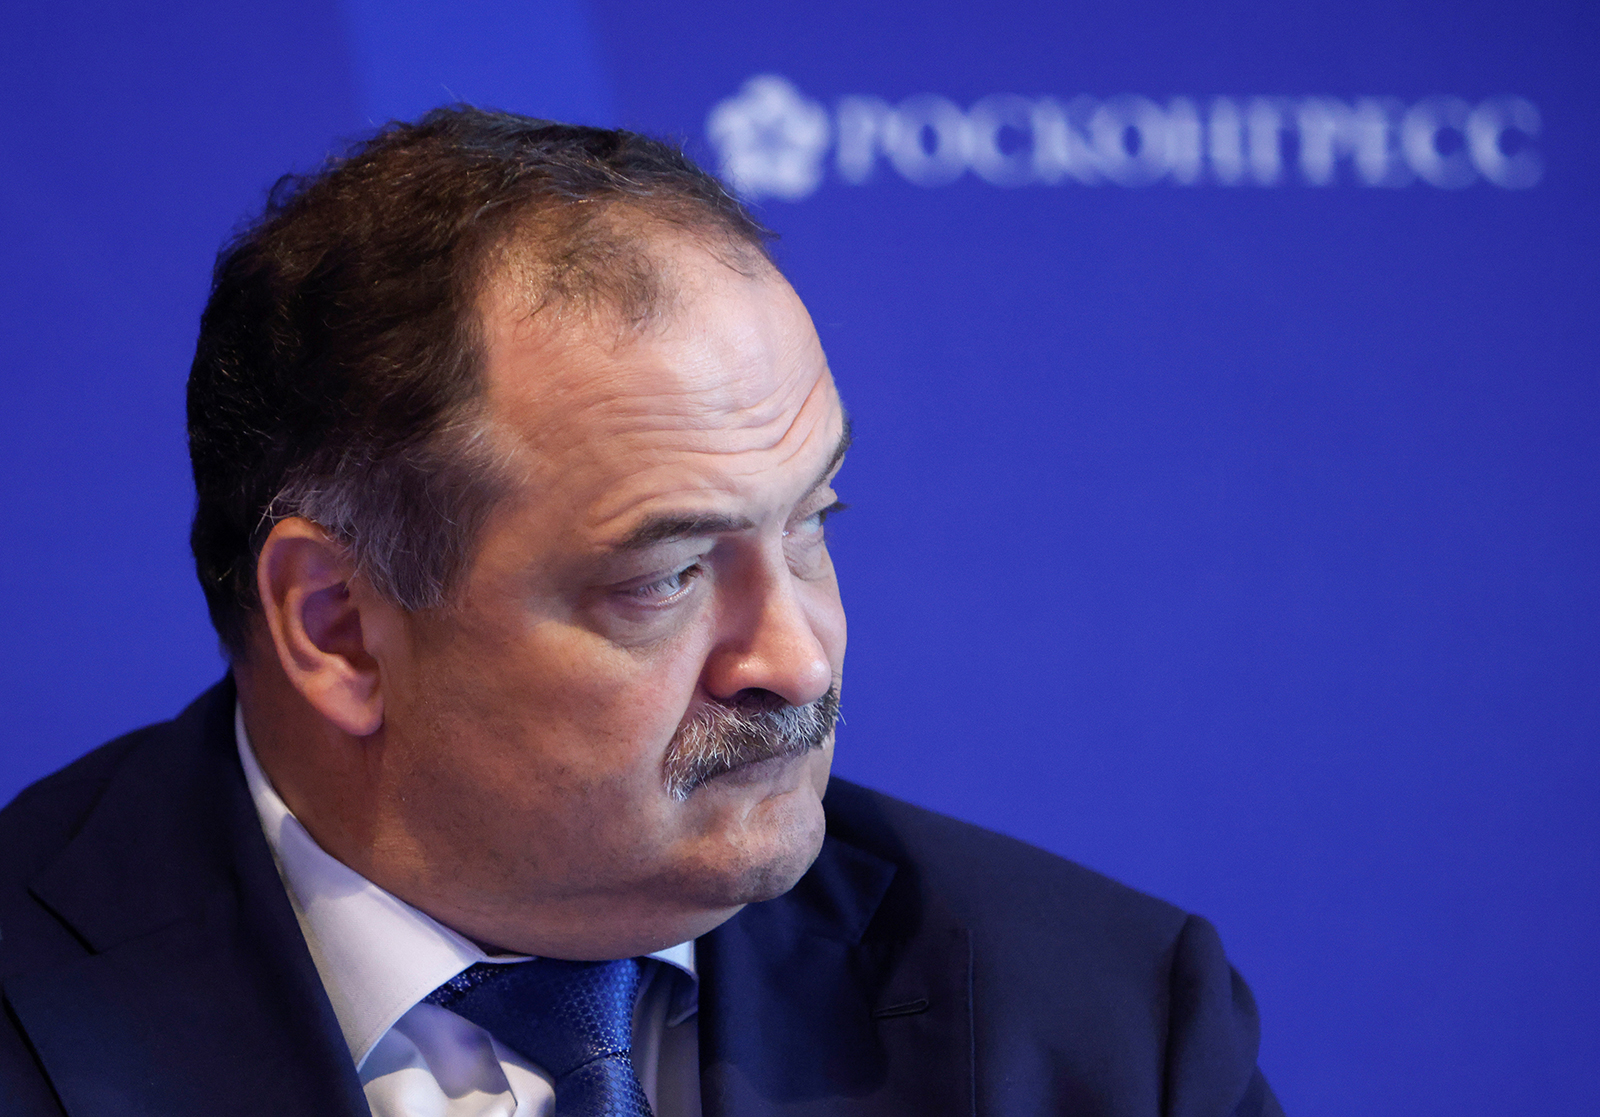 Dagestan's President Sergey Melikov attends a session of the St. Petersburg International Economic Forum (SPIEF) in Saint Petersburg on June 16.